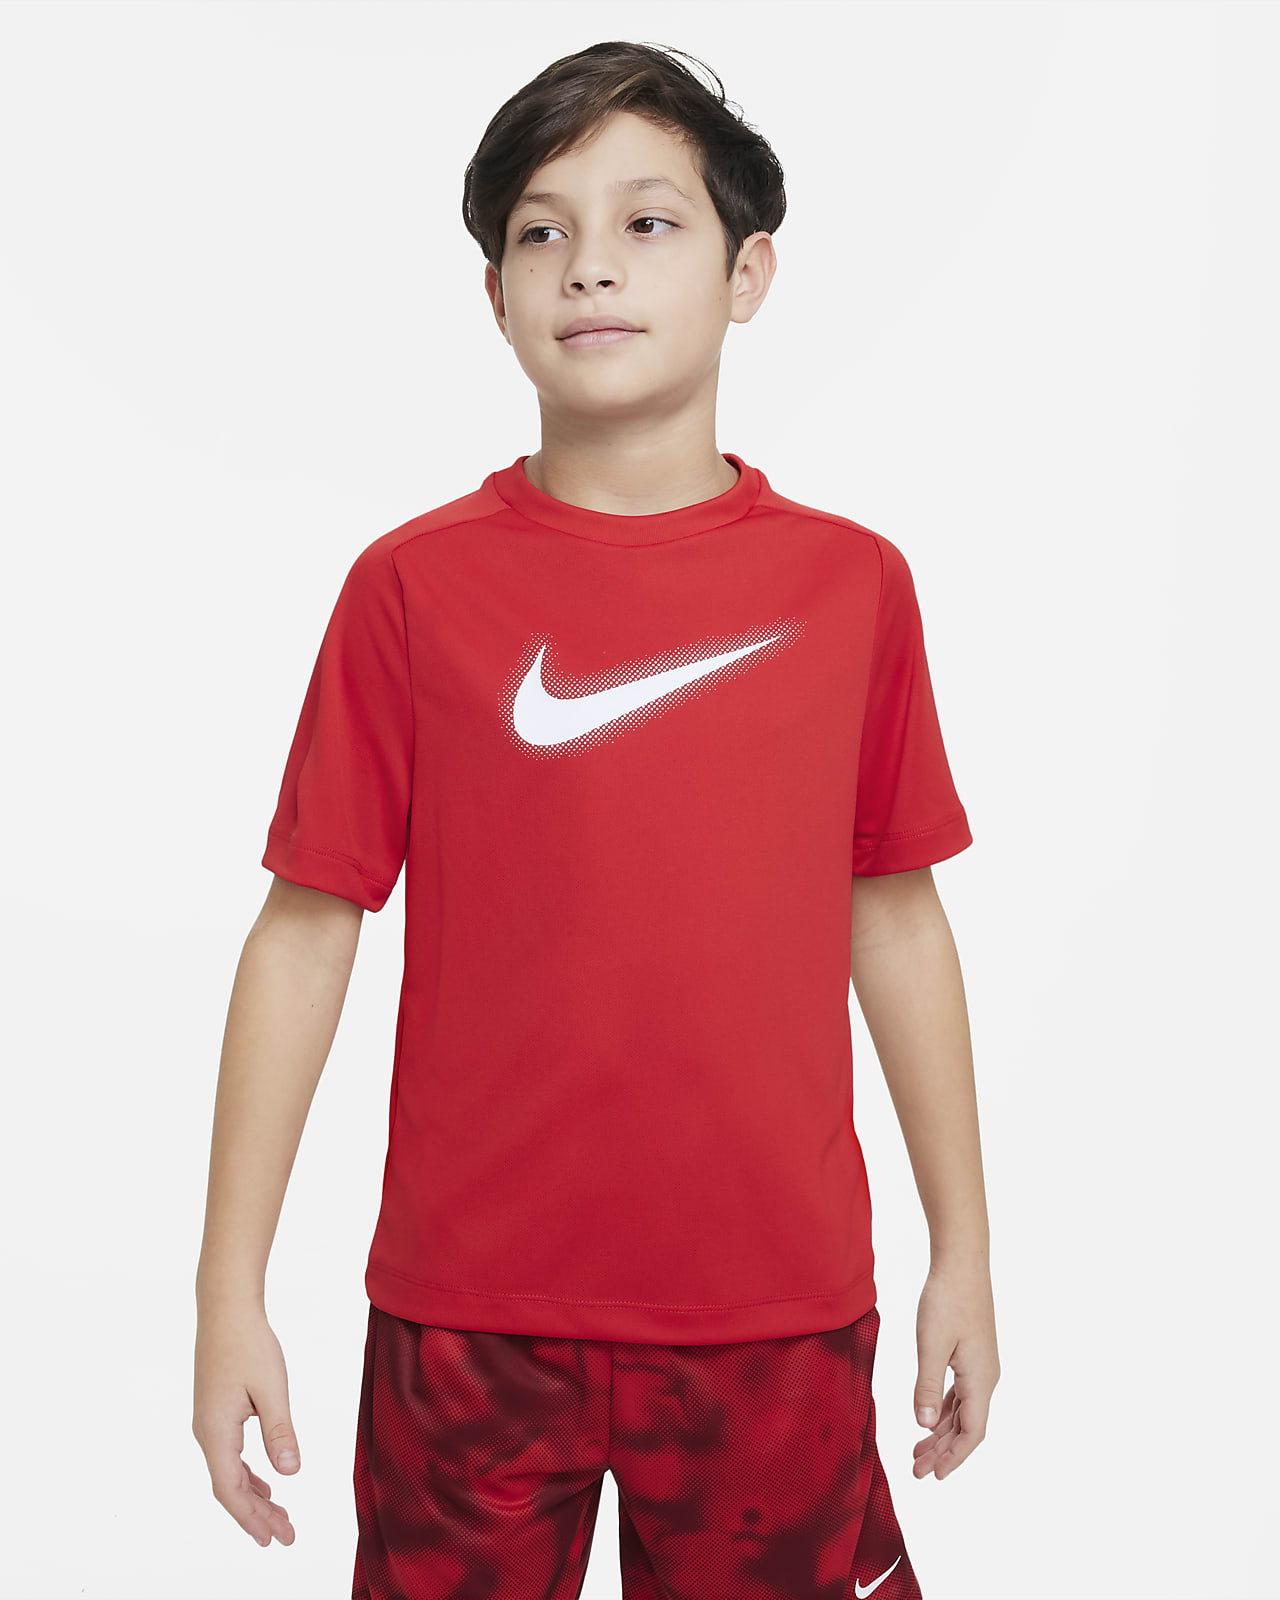 Nike Multi Camiseta de entrenamiento con estampado Dri-FIT - Niño